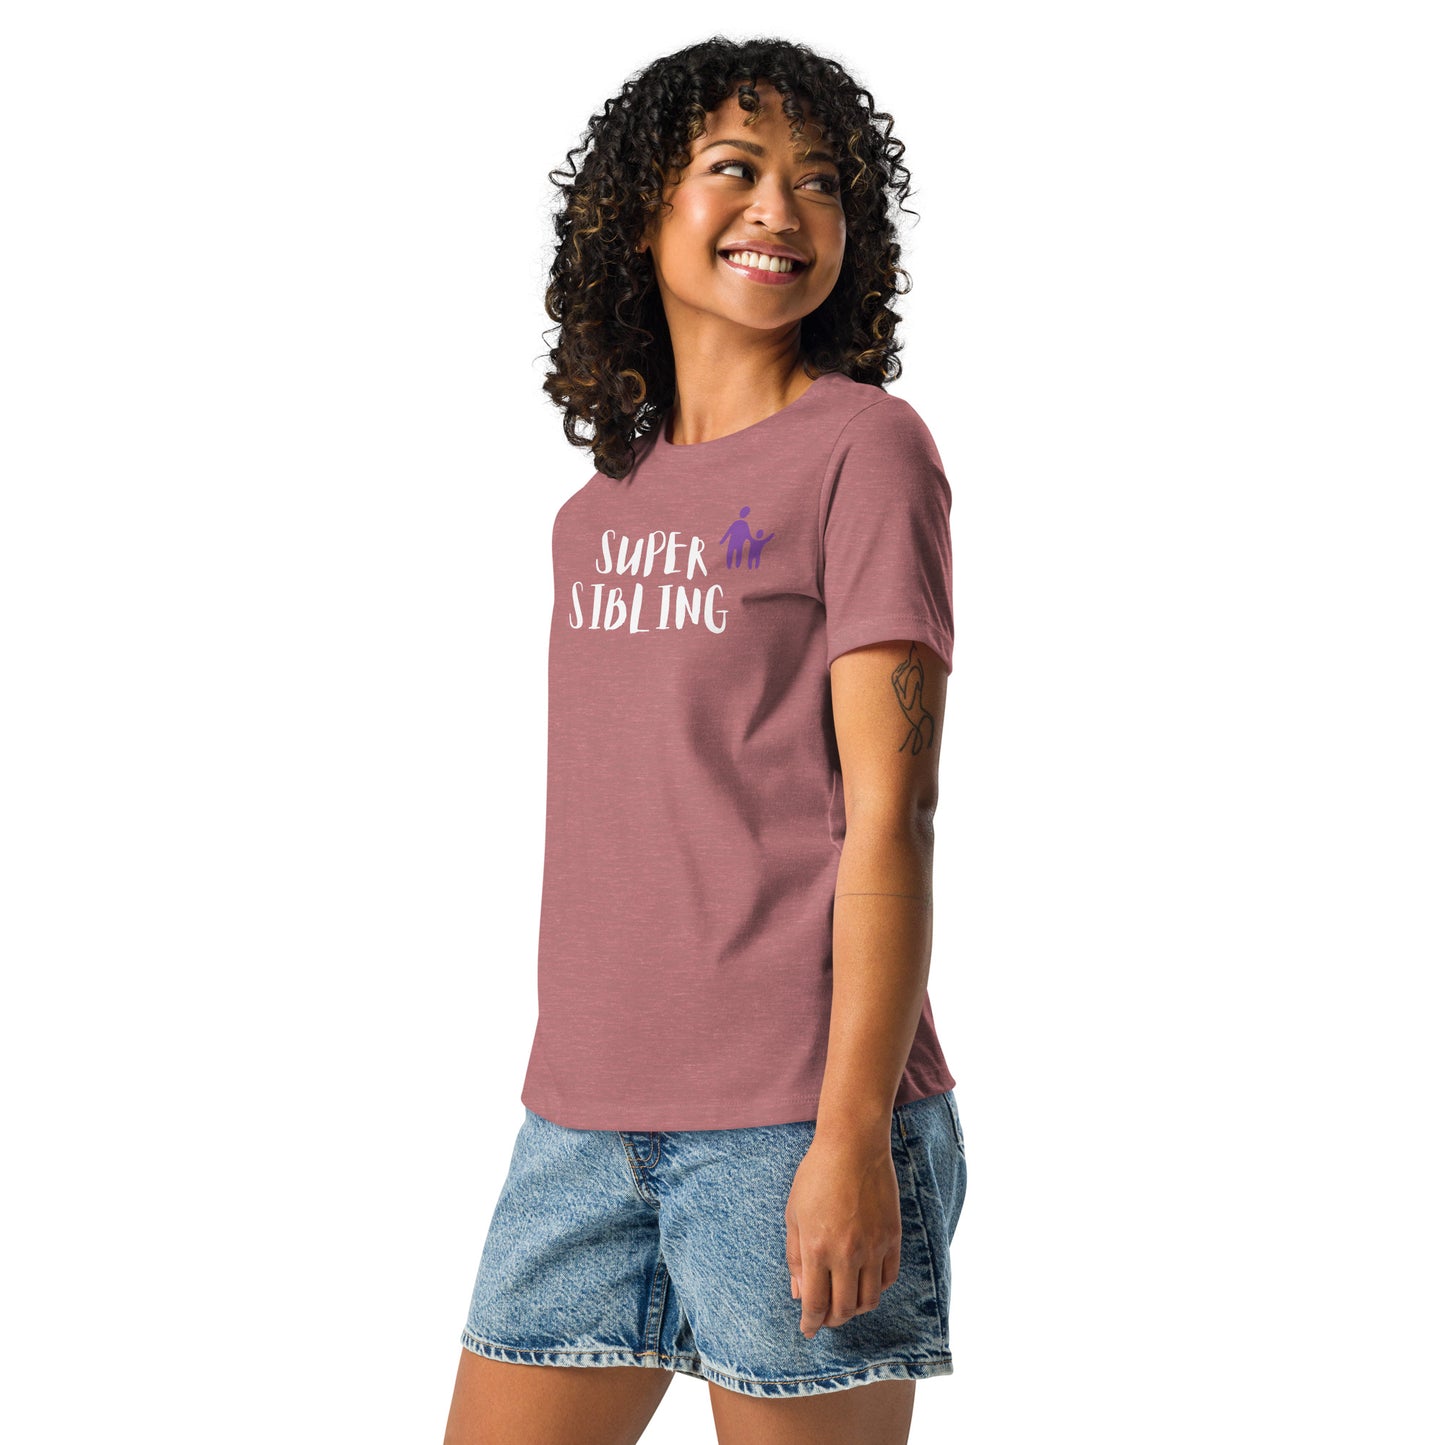 Super Sibling Women's Relaxed T-Shirt